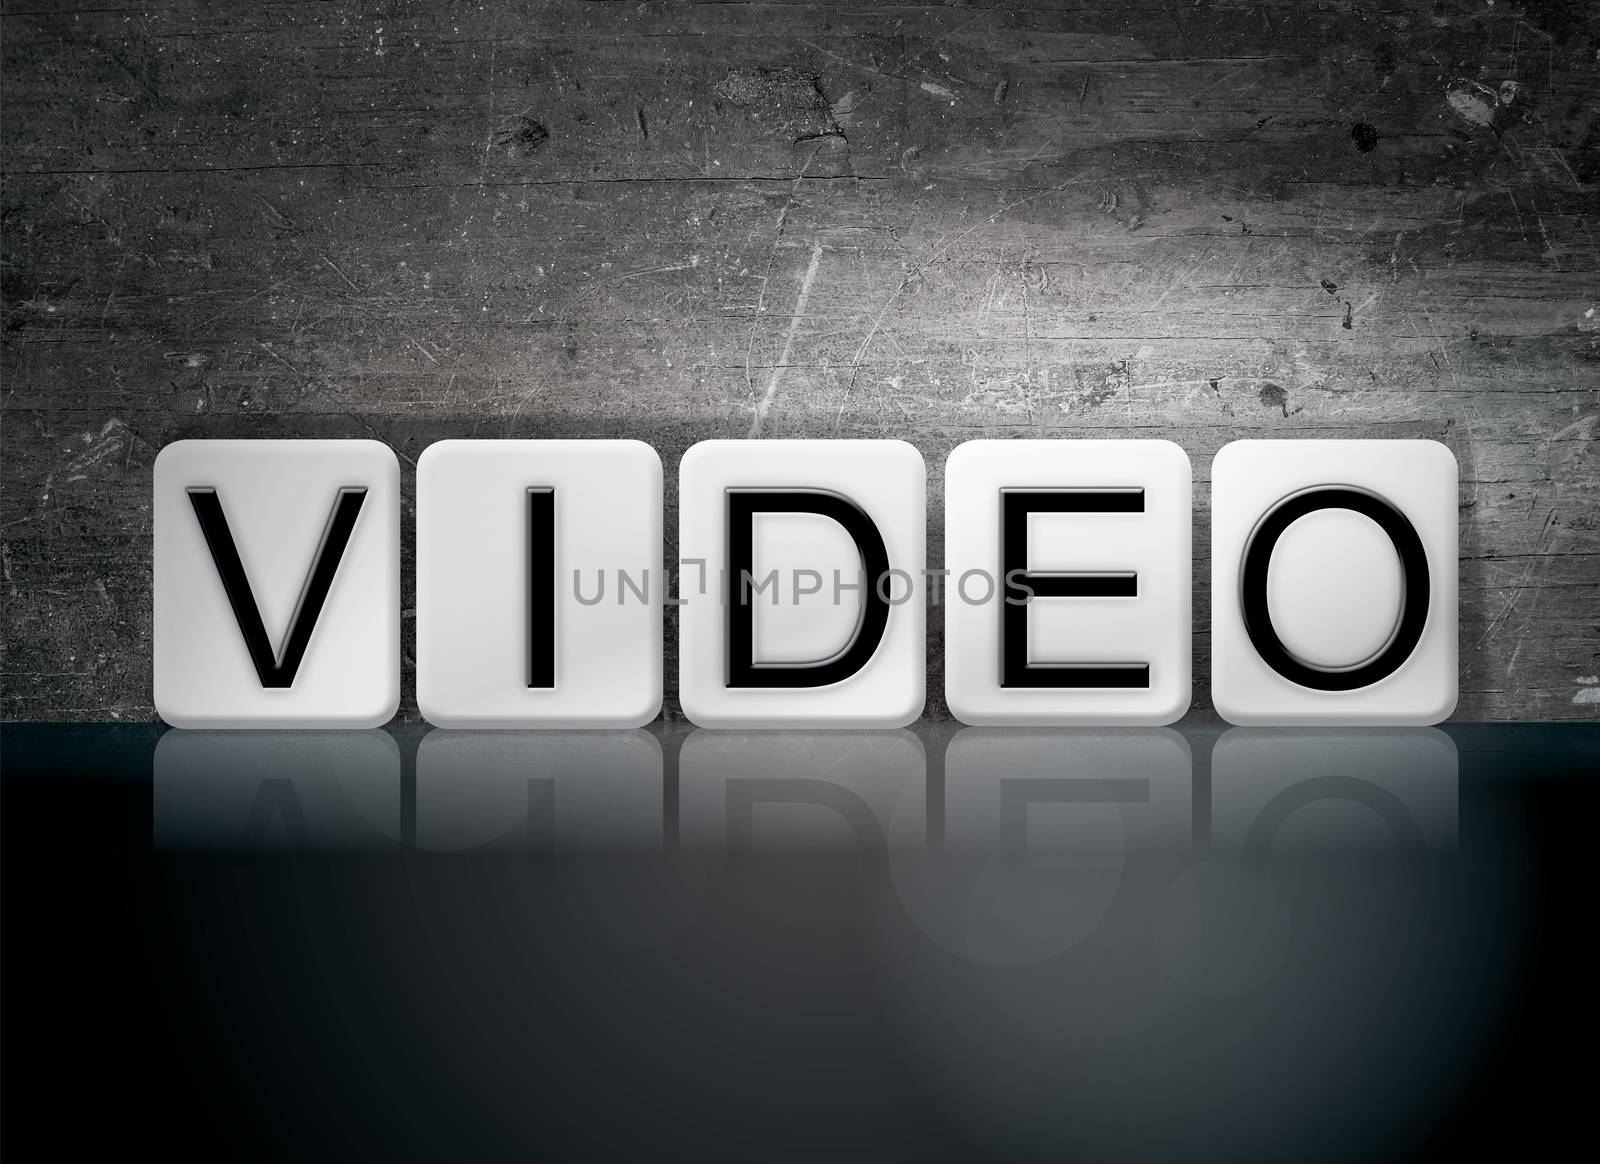 The word "Video" written in white tiles against a dark vintage grunge background.